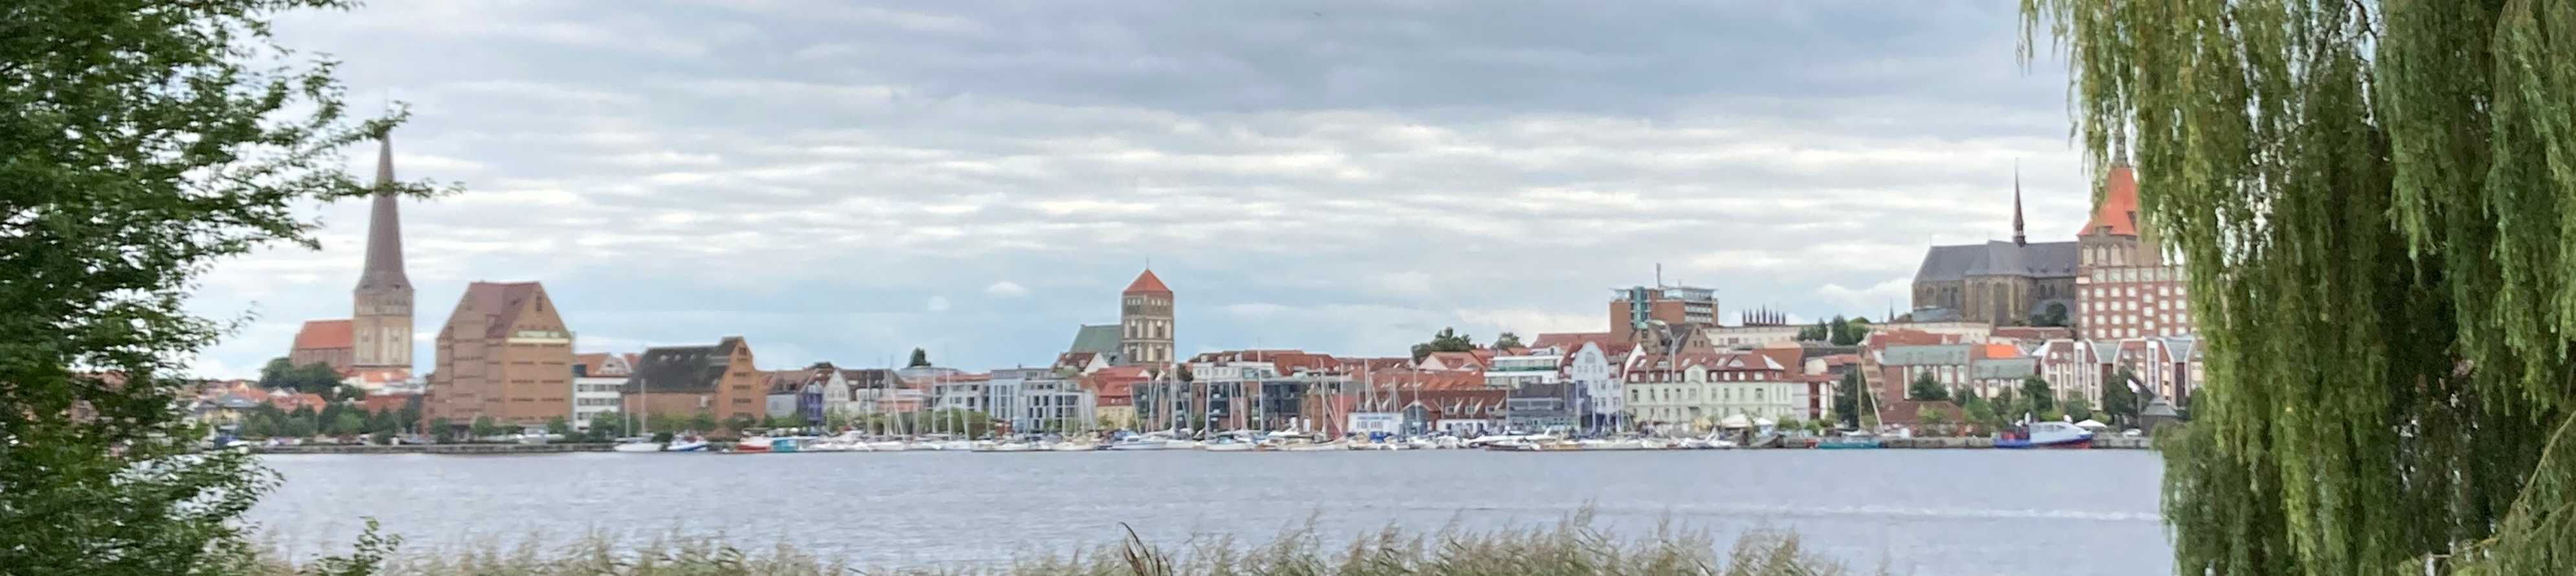 The Rostock harbor in Mecklenburg-Vorpommern, Germany